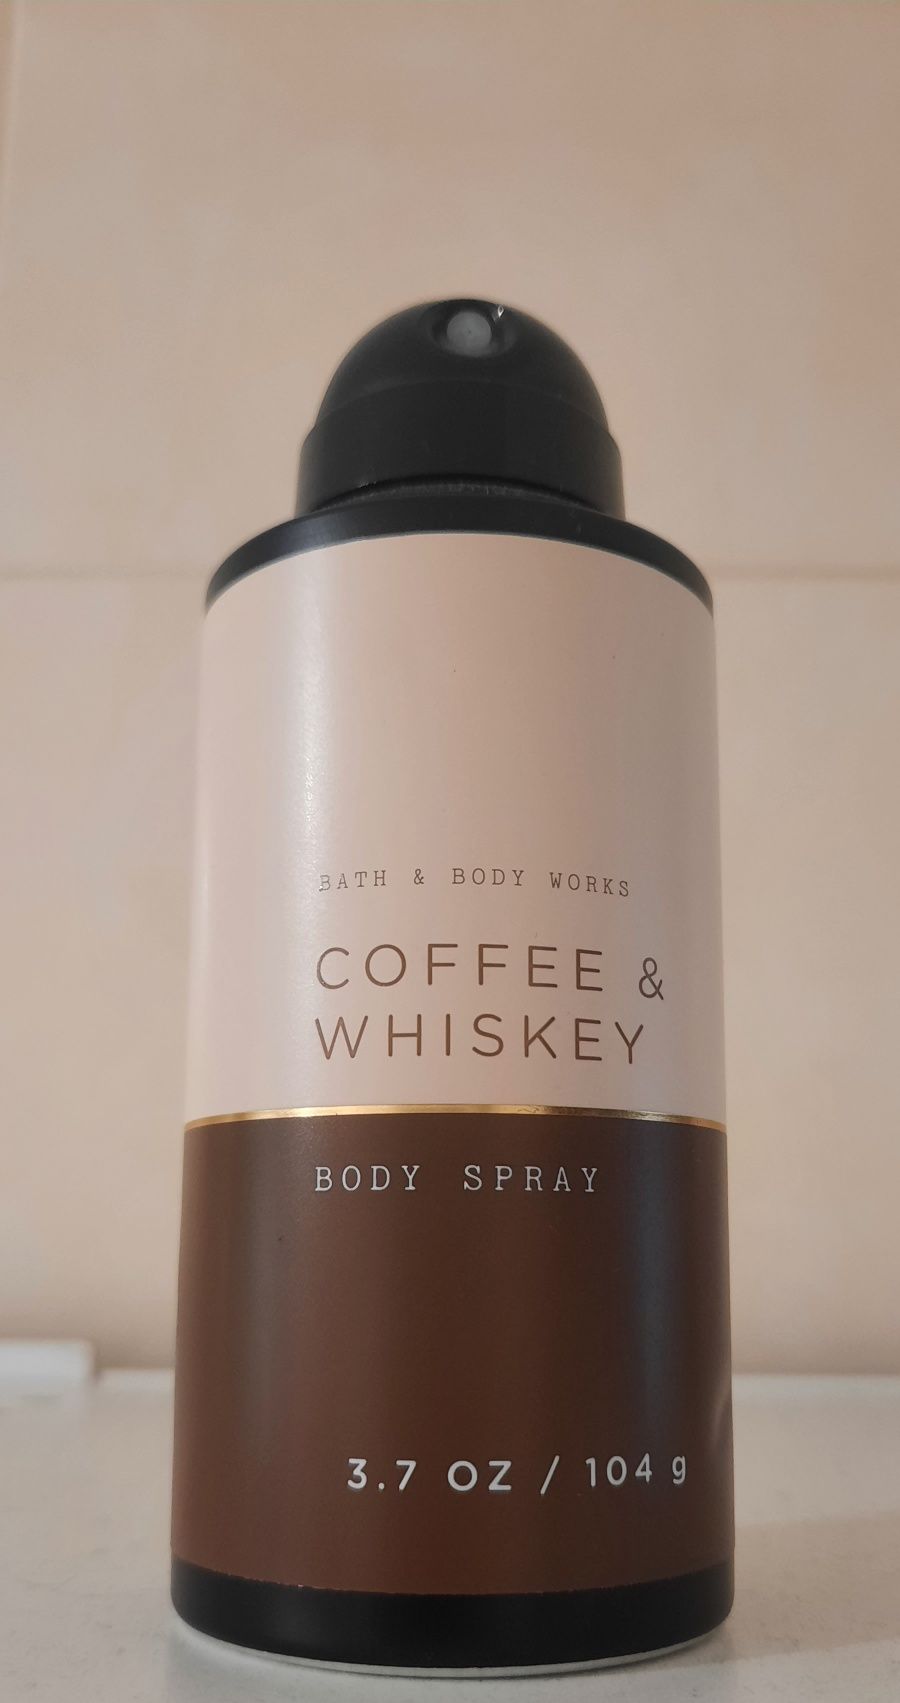 Coffee &whiskey bath and body works